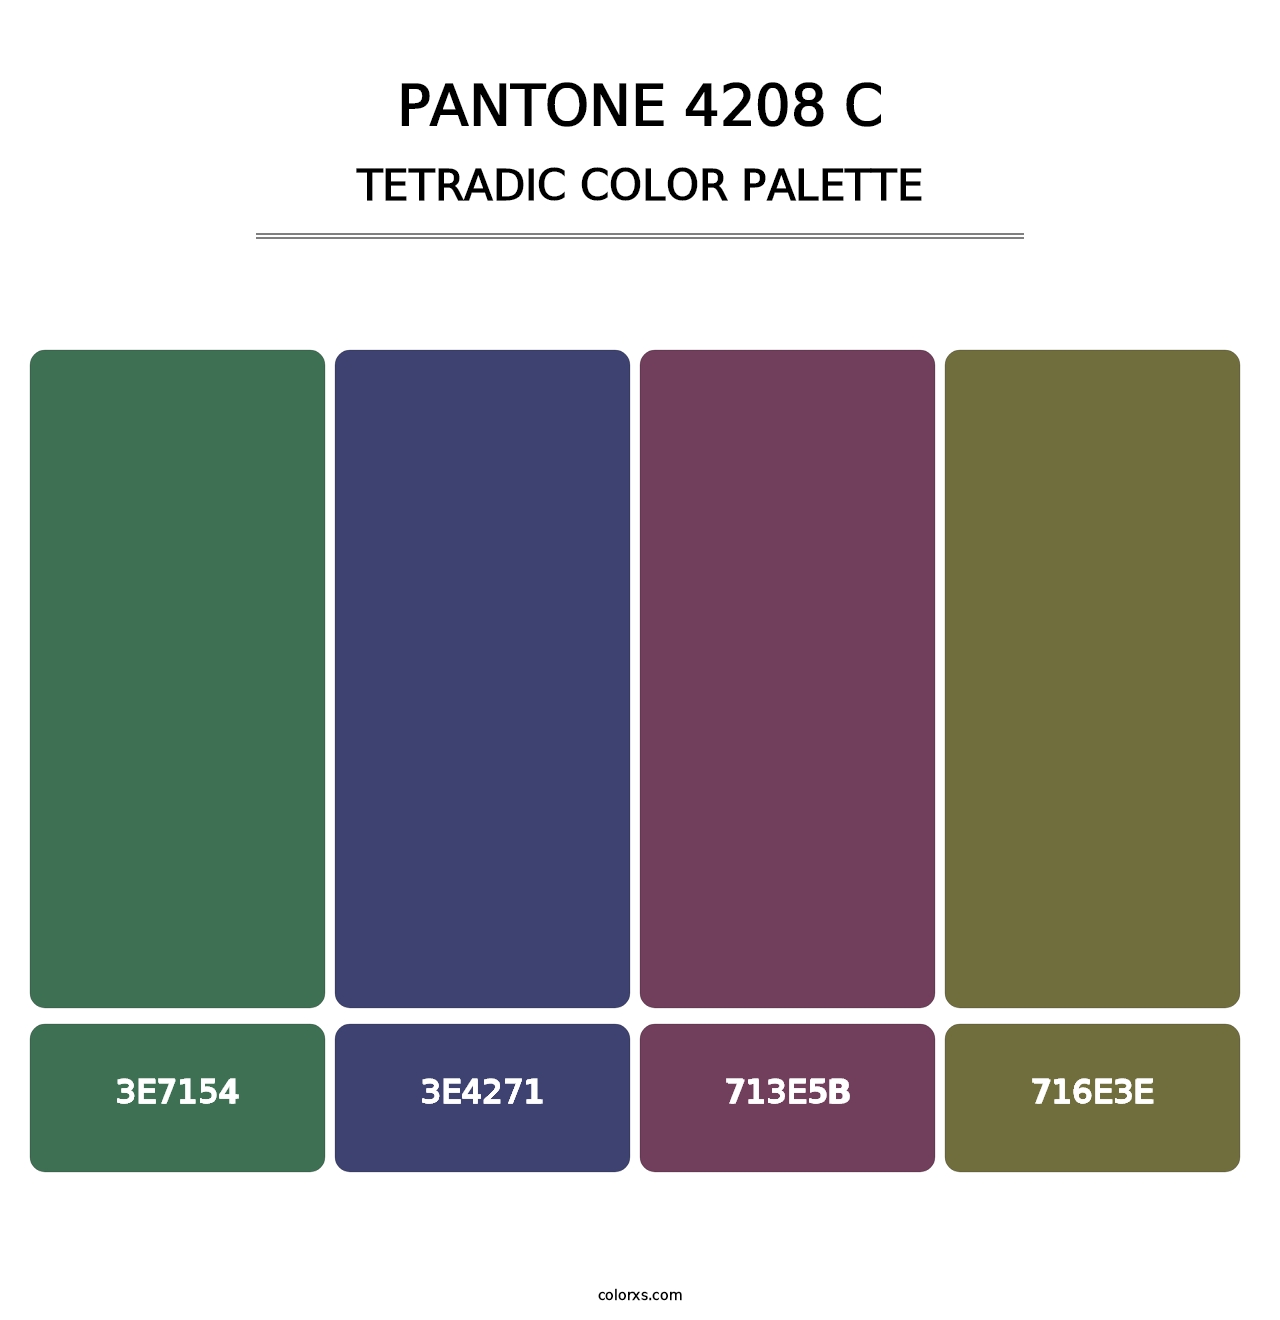 PANTONE 4208 C - Tetradic Color Palette